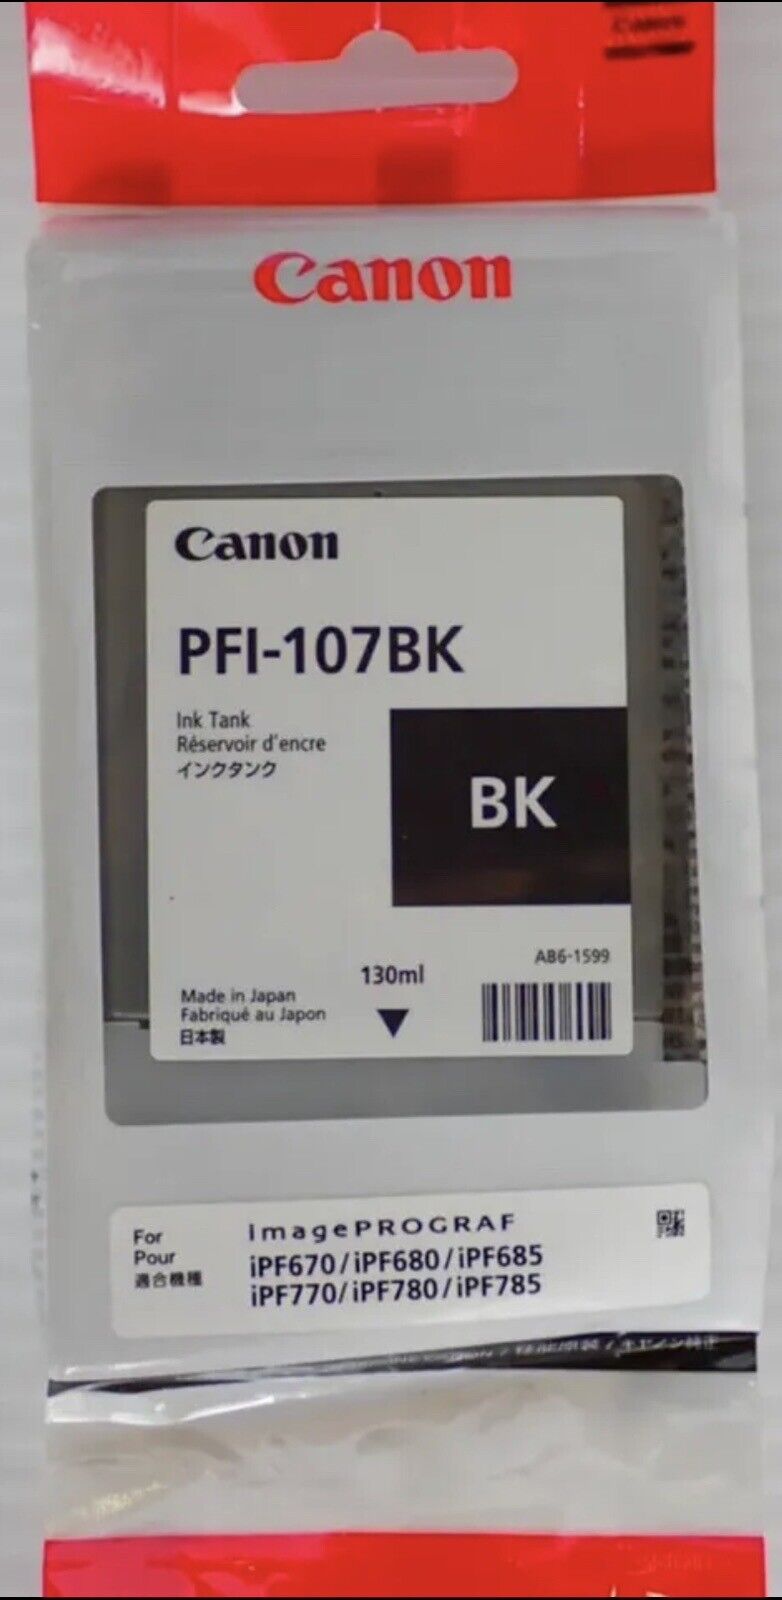 Canon PFI-107BK (Black) 130ml Ink Tank Toner Printer Cartridge Expired 2024 Date